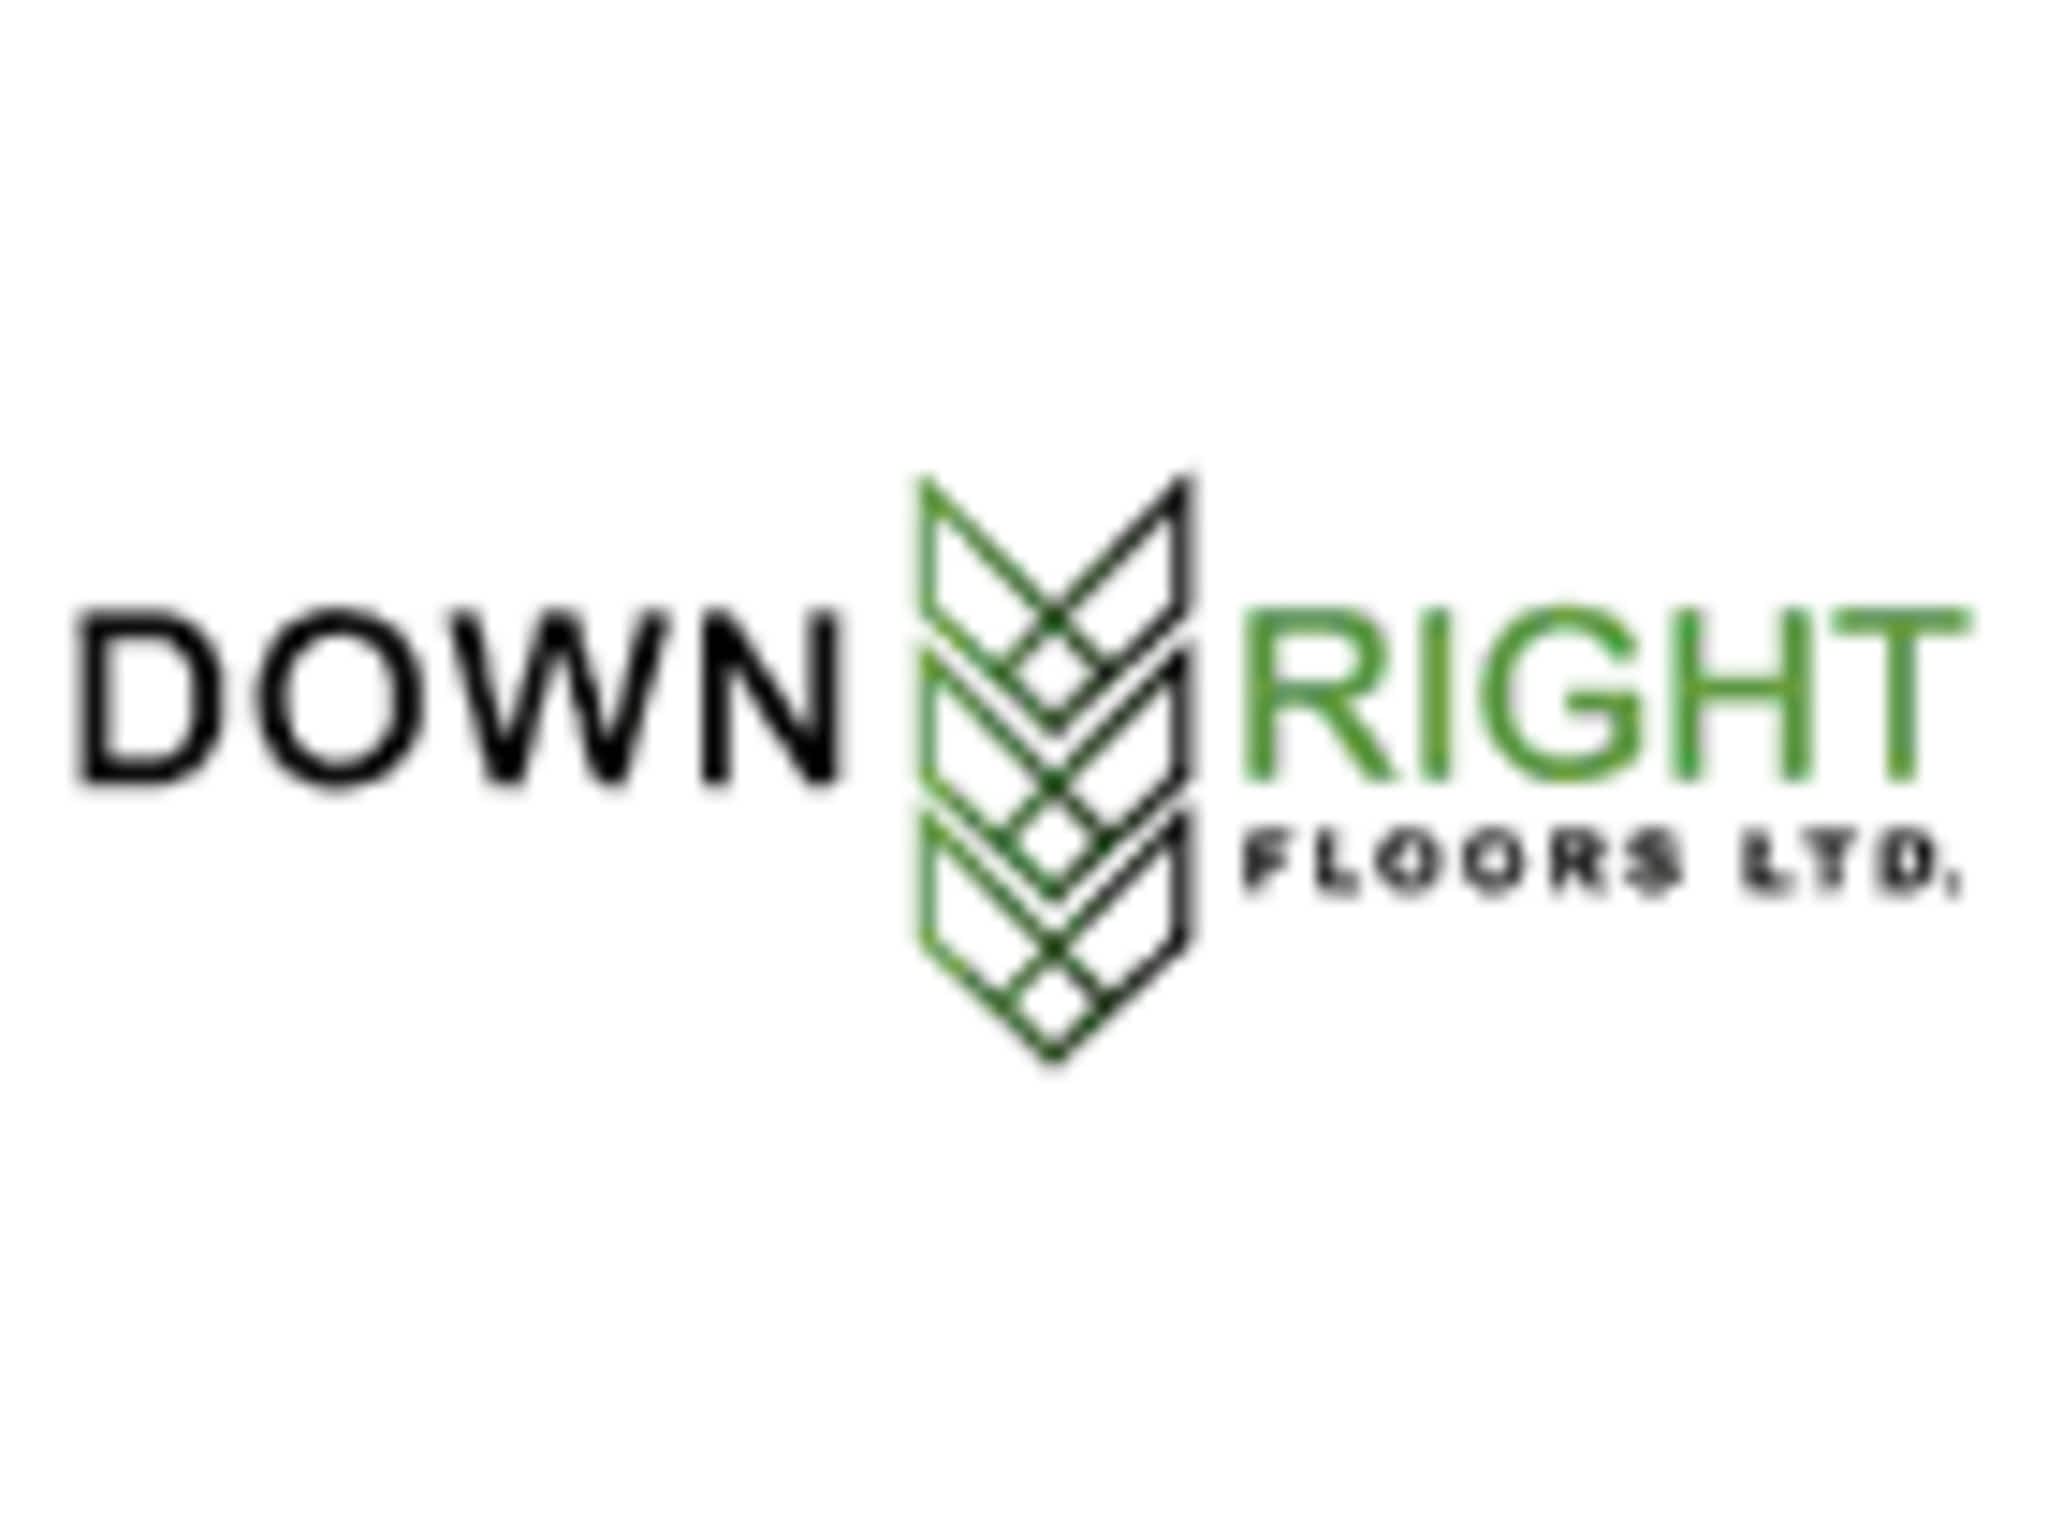 photo DownRight Floors Ltd